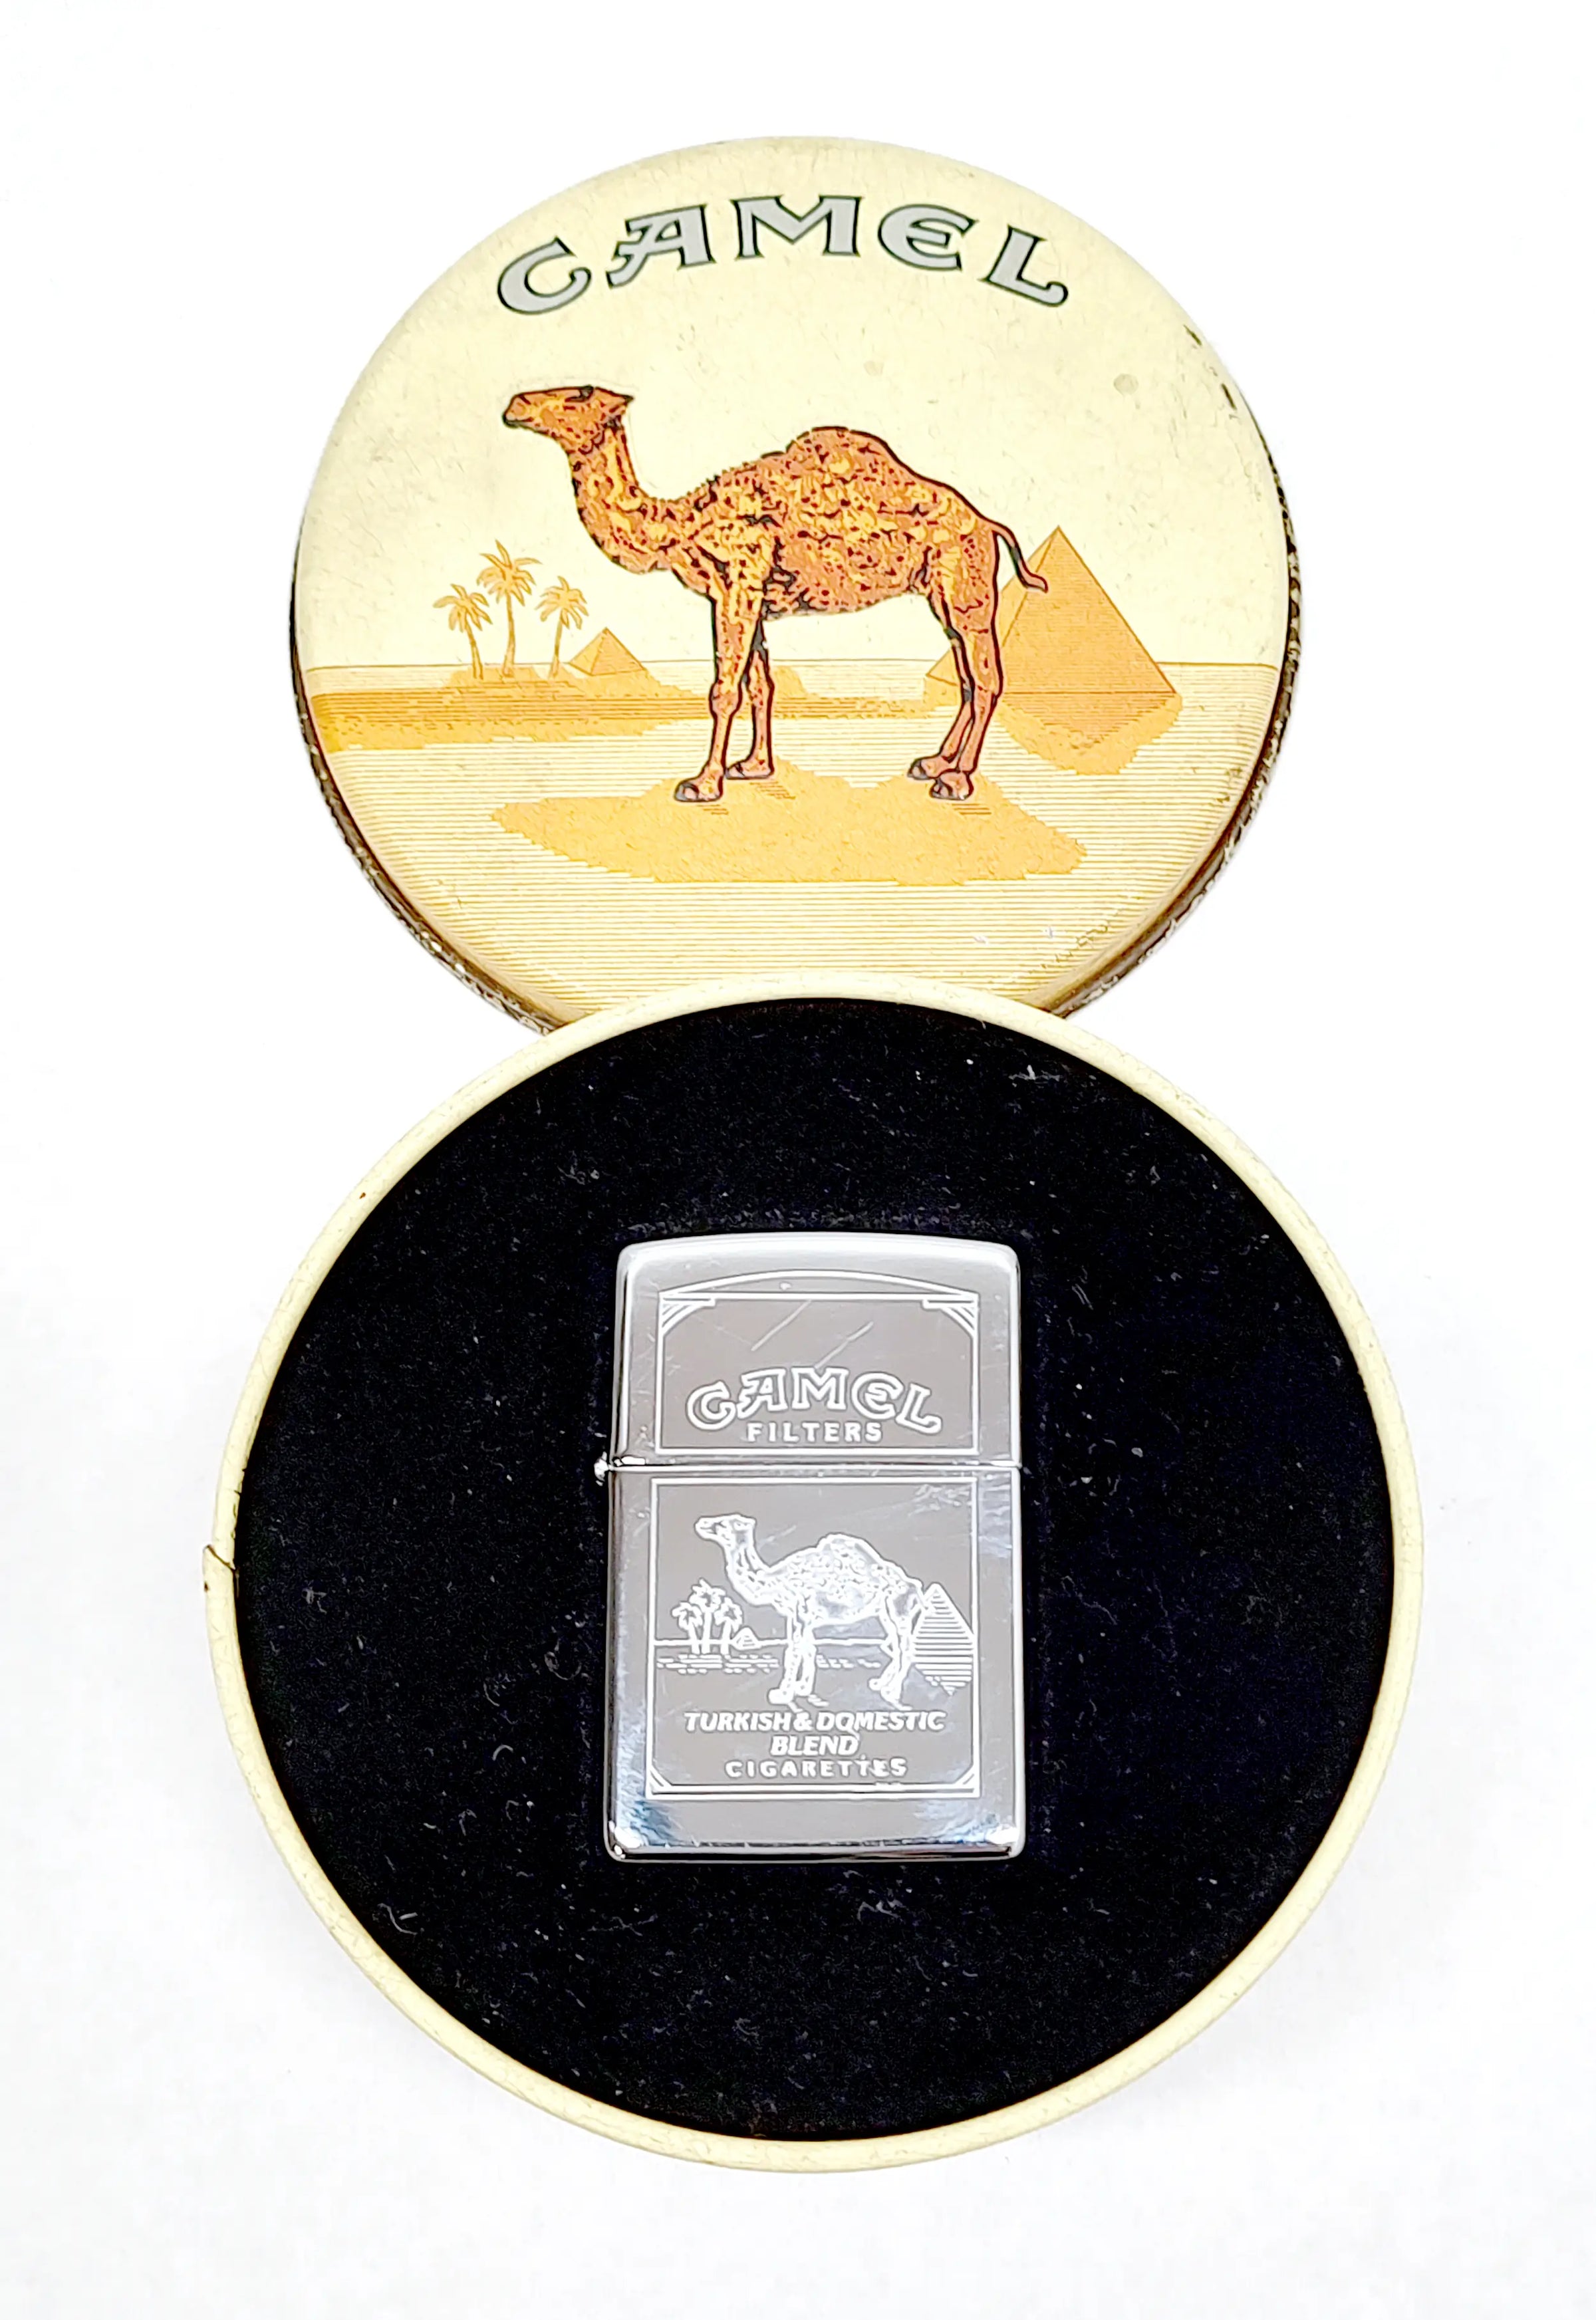 New XI 1995 Camel Filters Turkish Blend High Polished Chrome Zippo Lighter